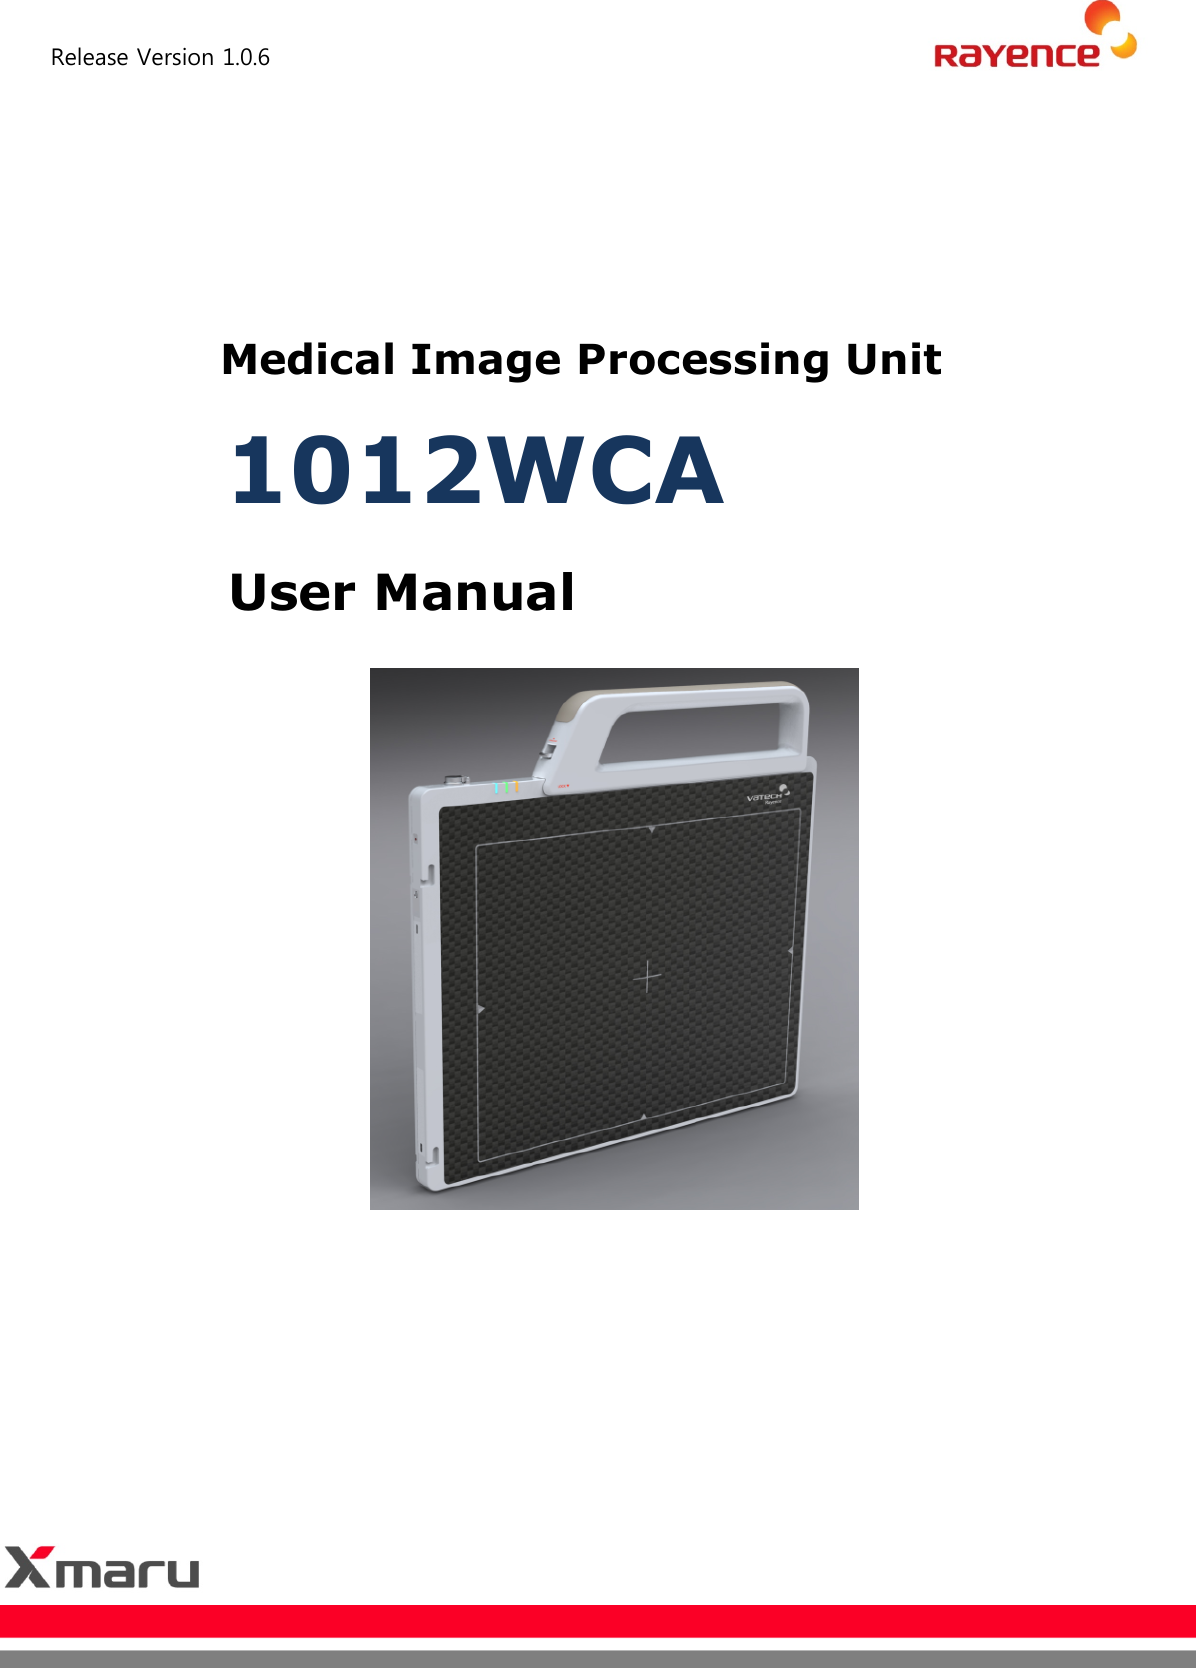        Release Version 1.0.6 Medical Image Processing Unit 1012WCA User Manual 